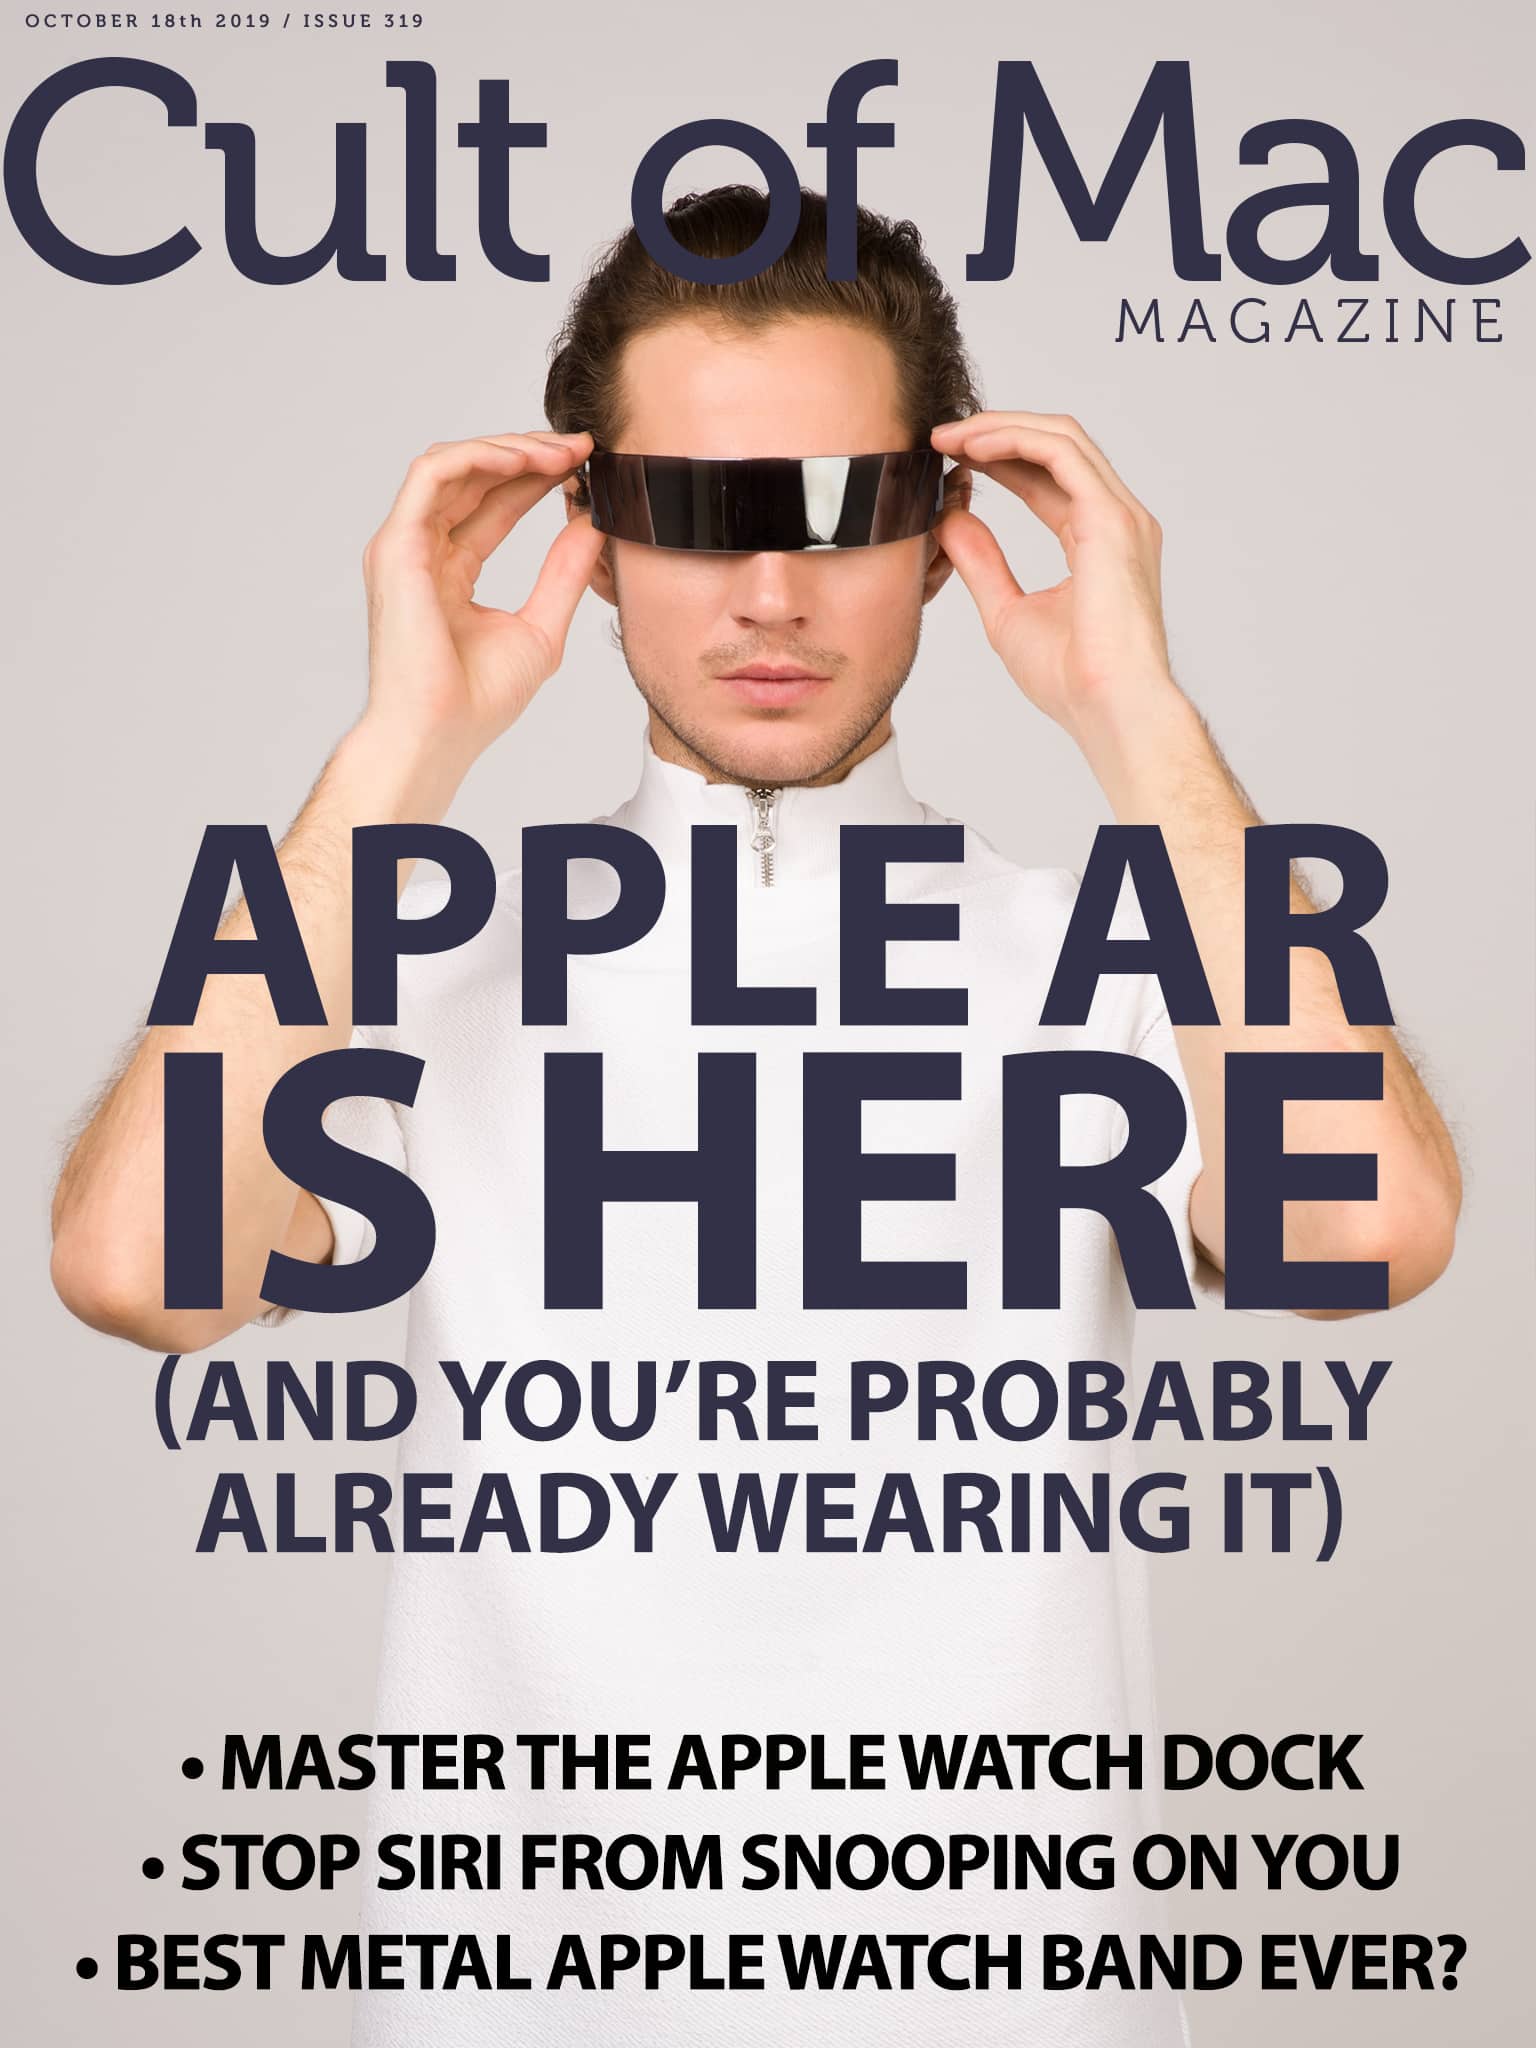 Apple AR is here: Cult of Mac Magazine 319